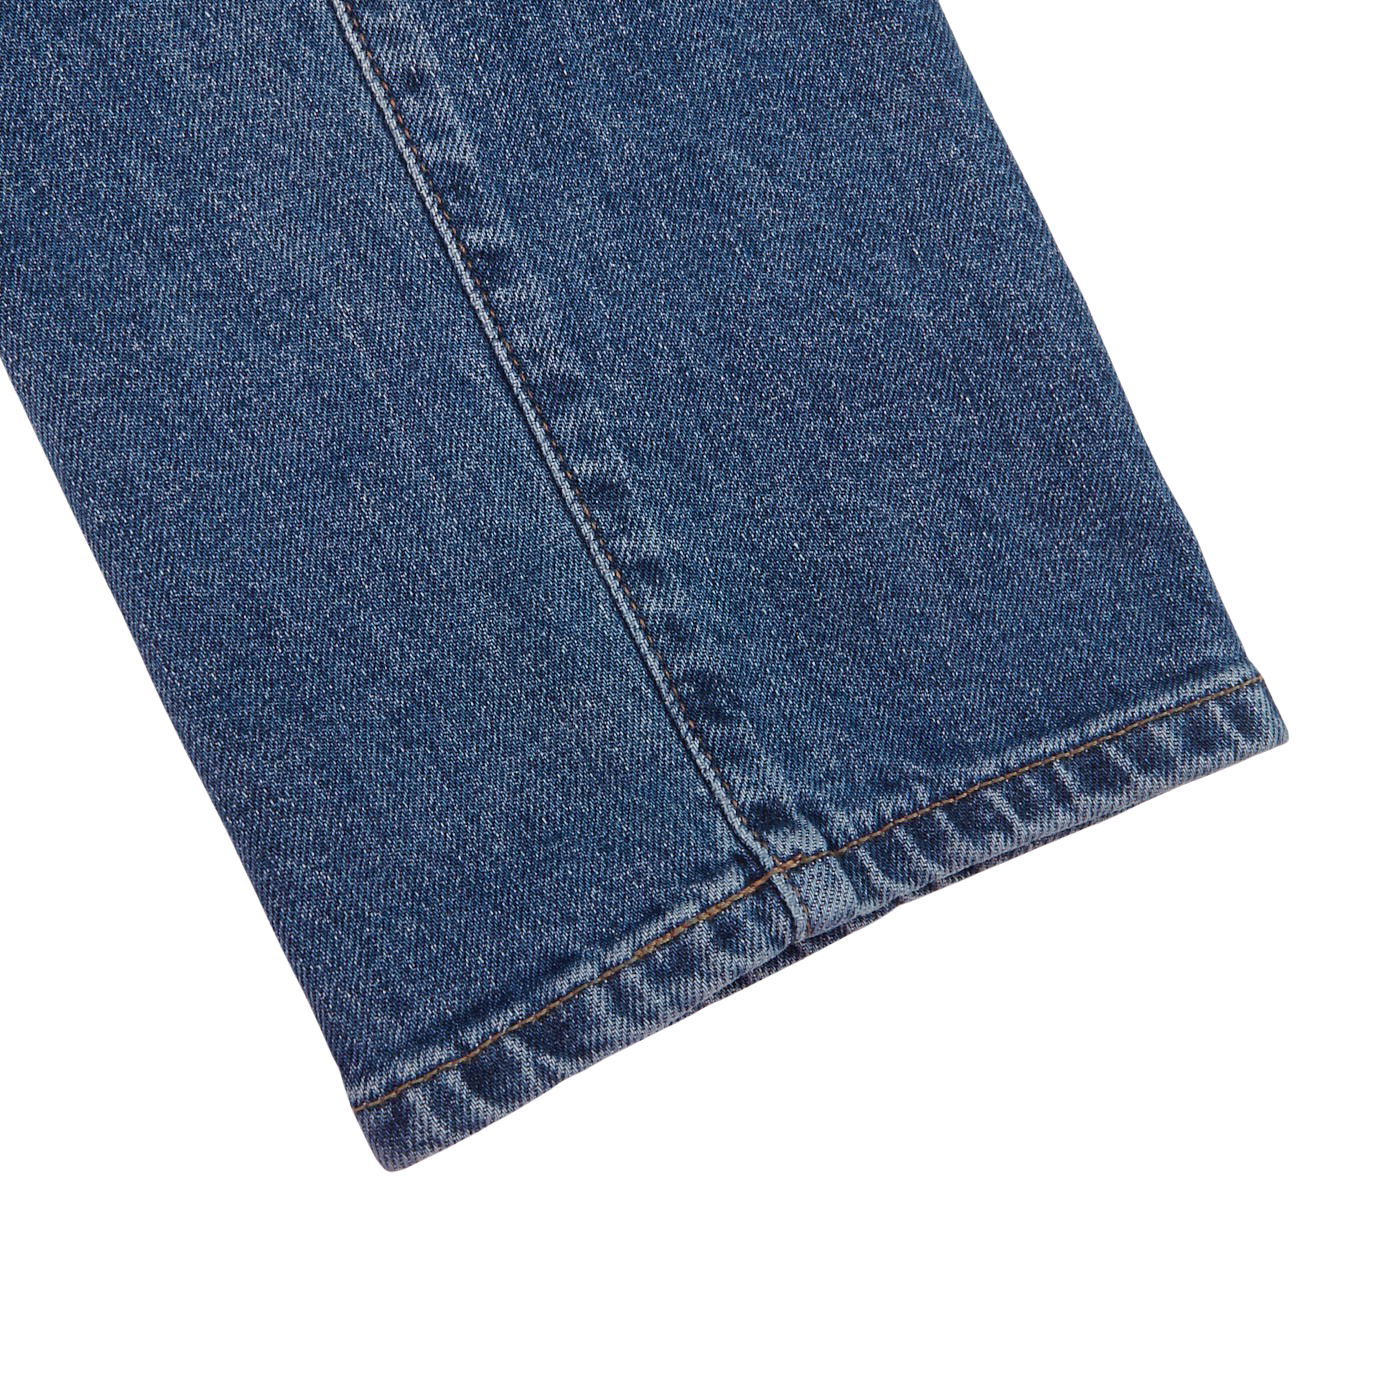 C.O.F Studio Mid Blue Organic Candiani Cotton M7 Jeans Cuff